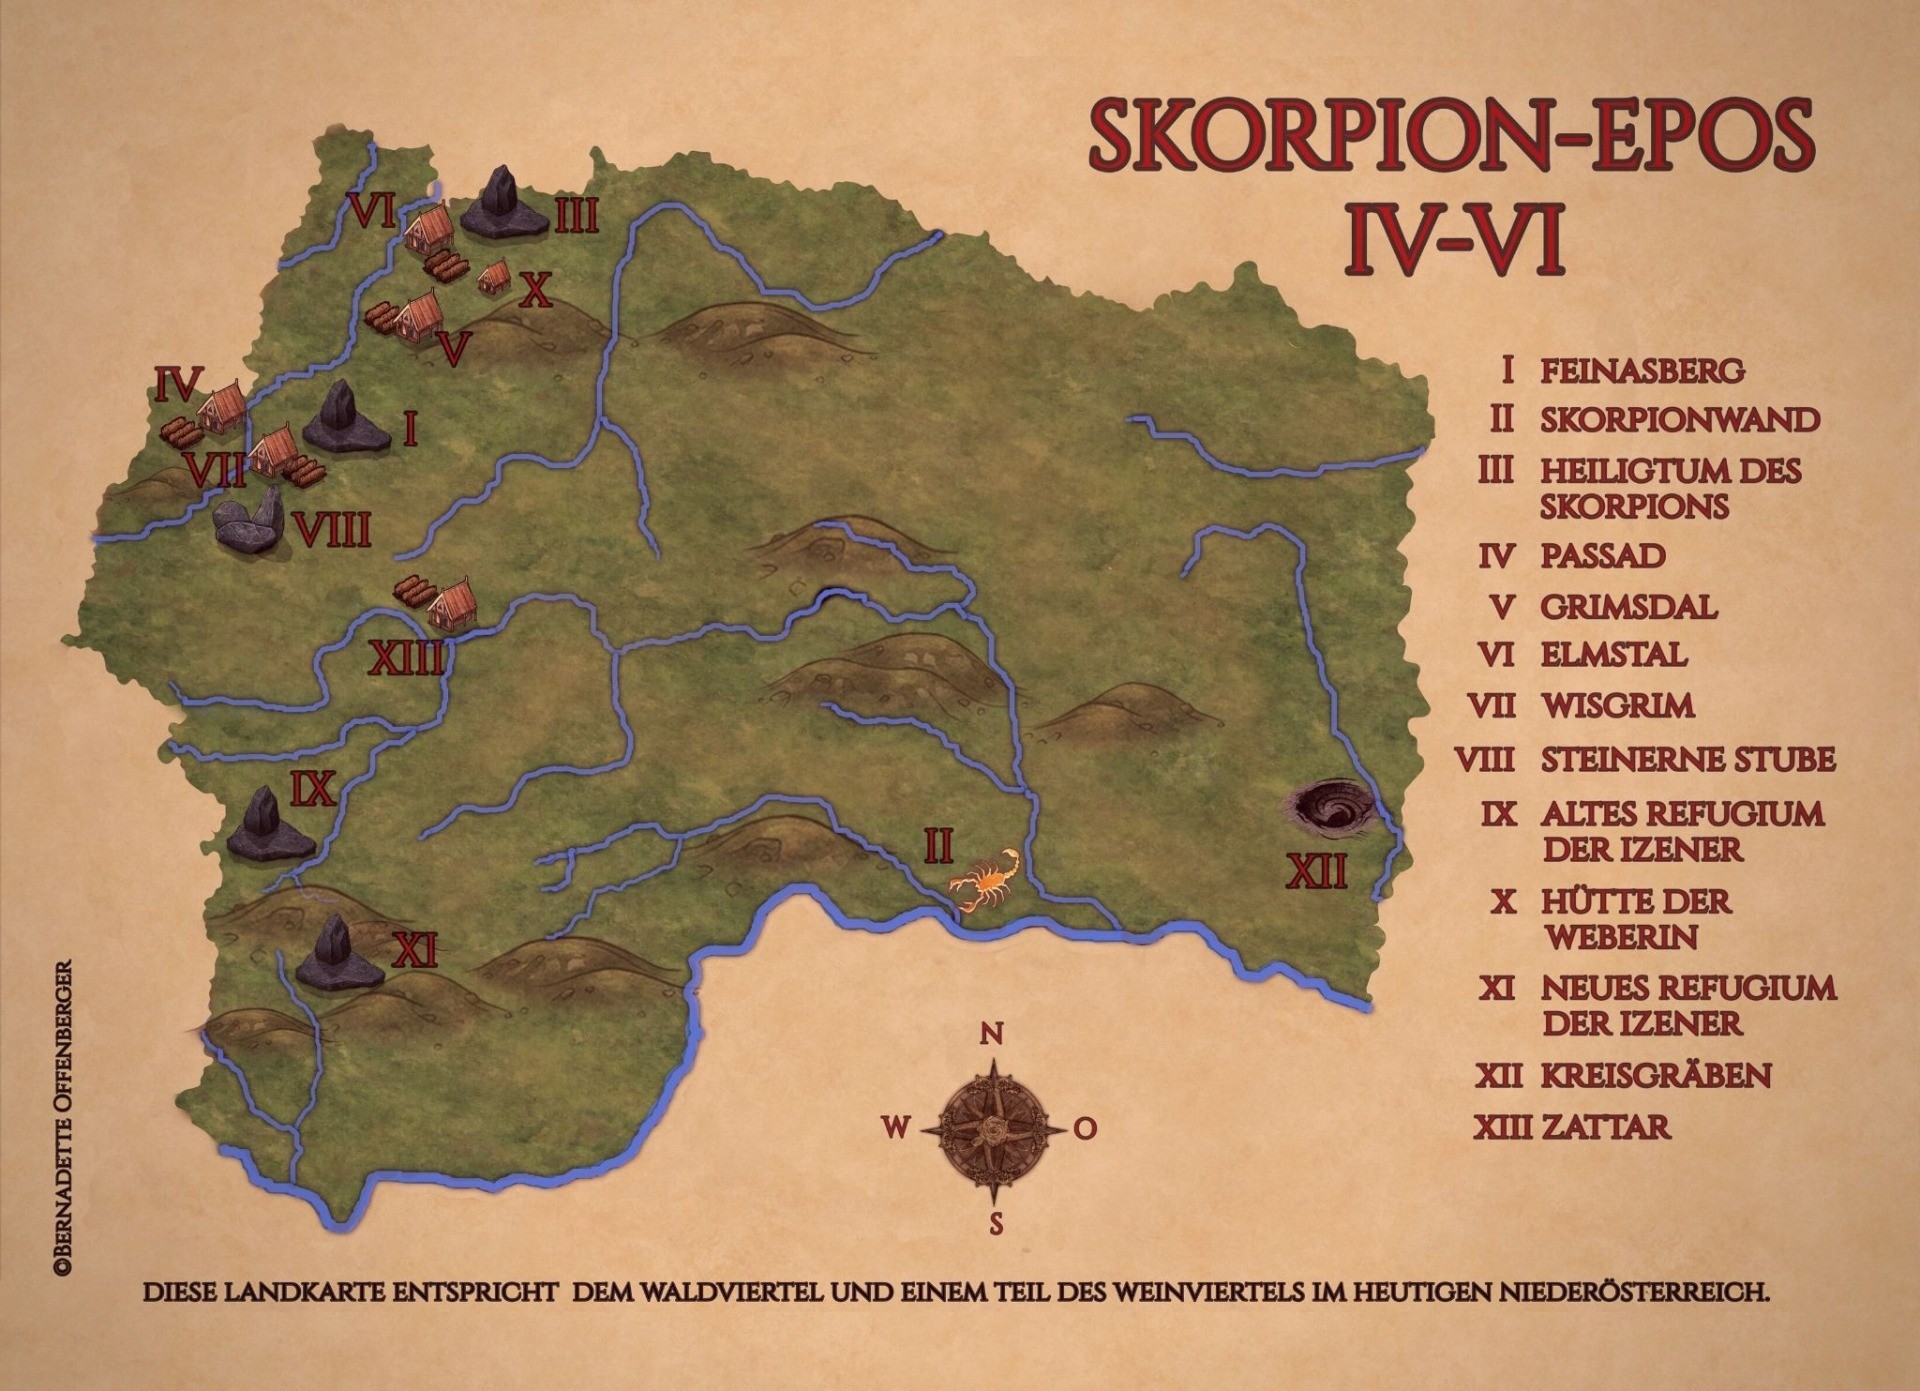 Skorpion Epos IV-VI